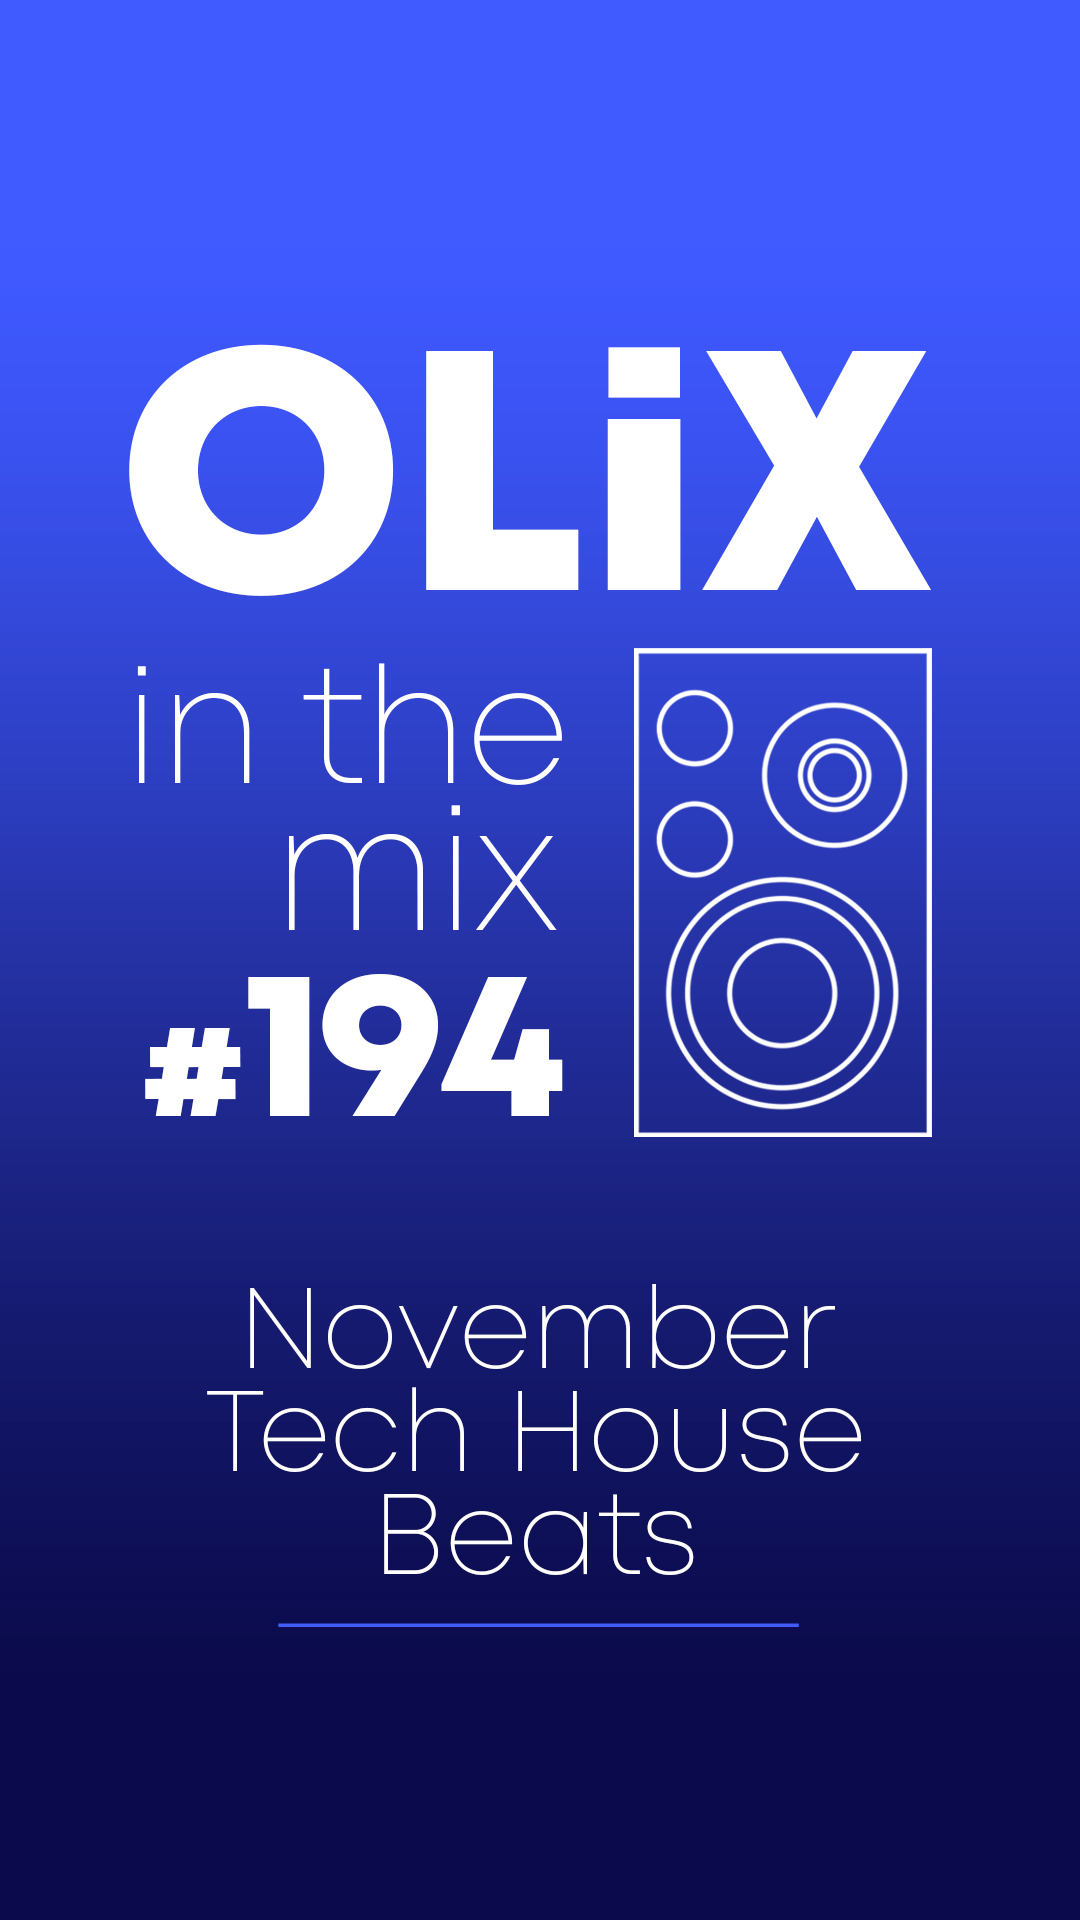 OLiX in the Mix - 194 - November Tech House Beats